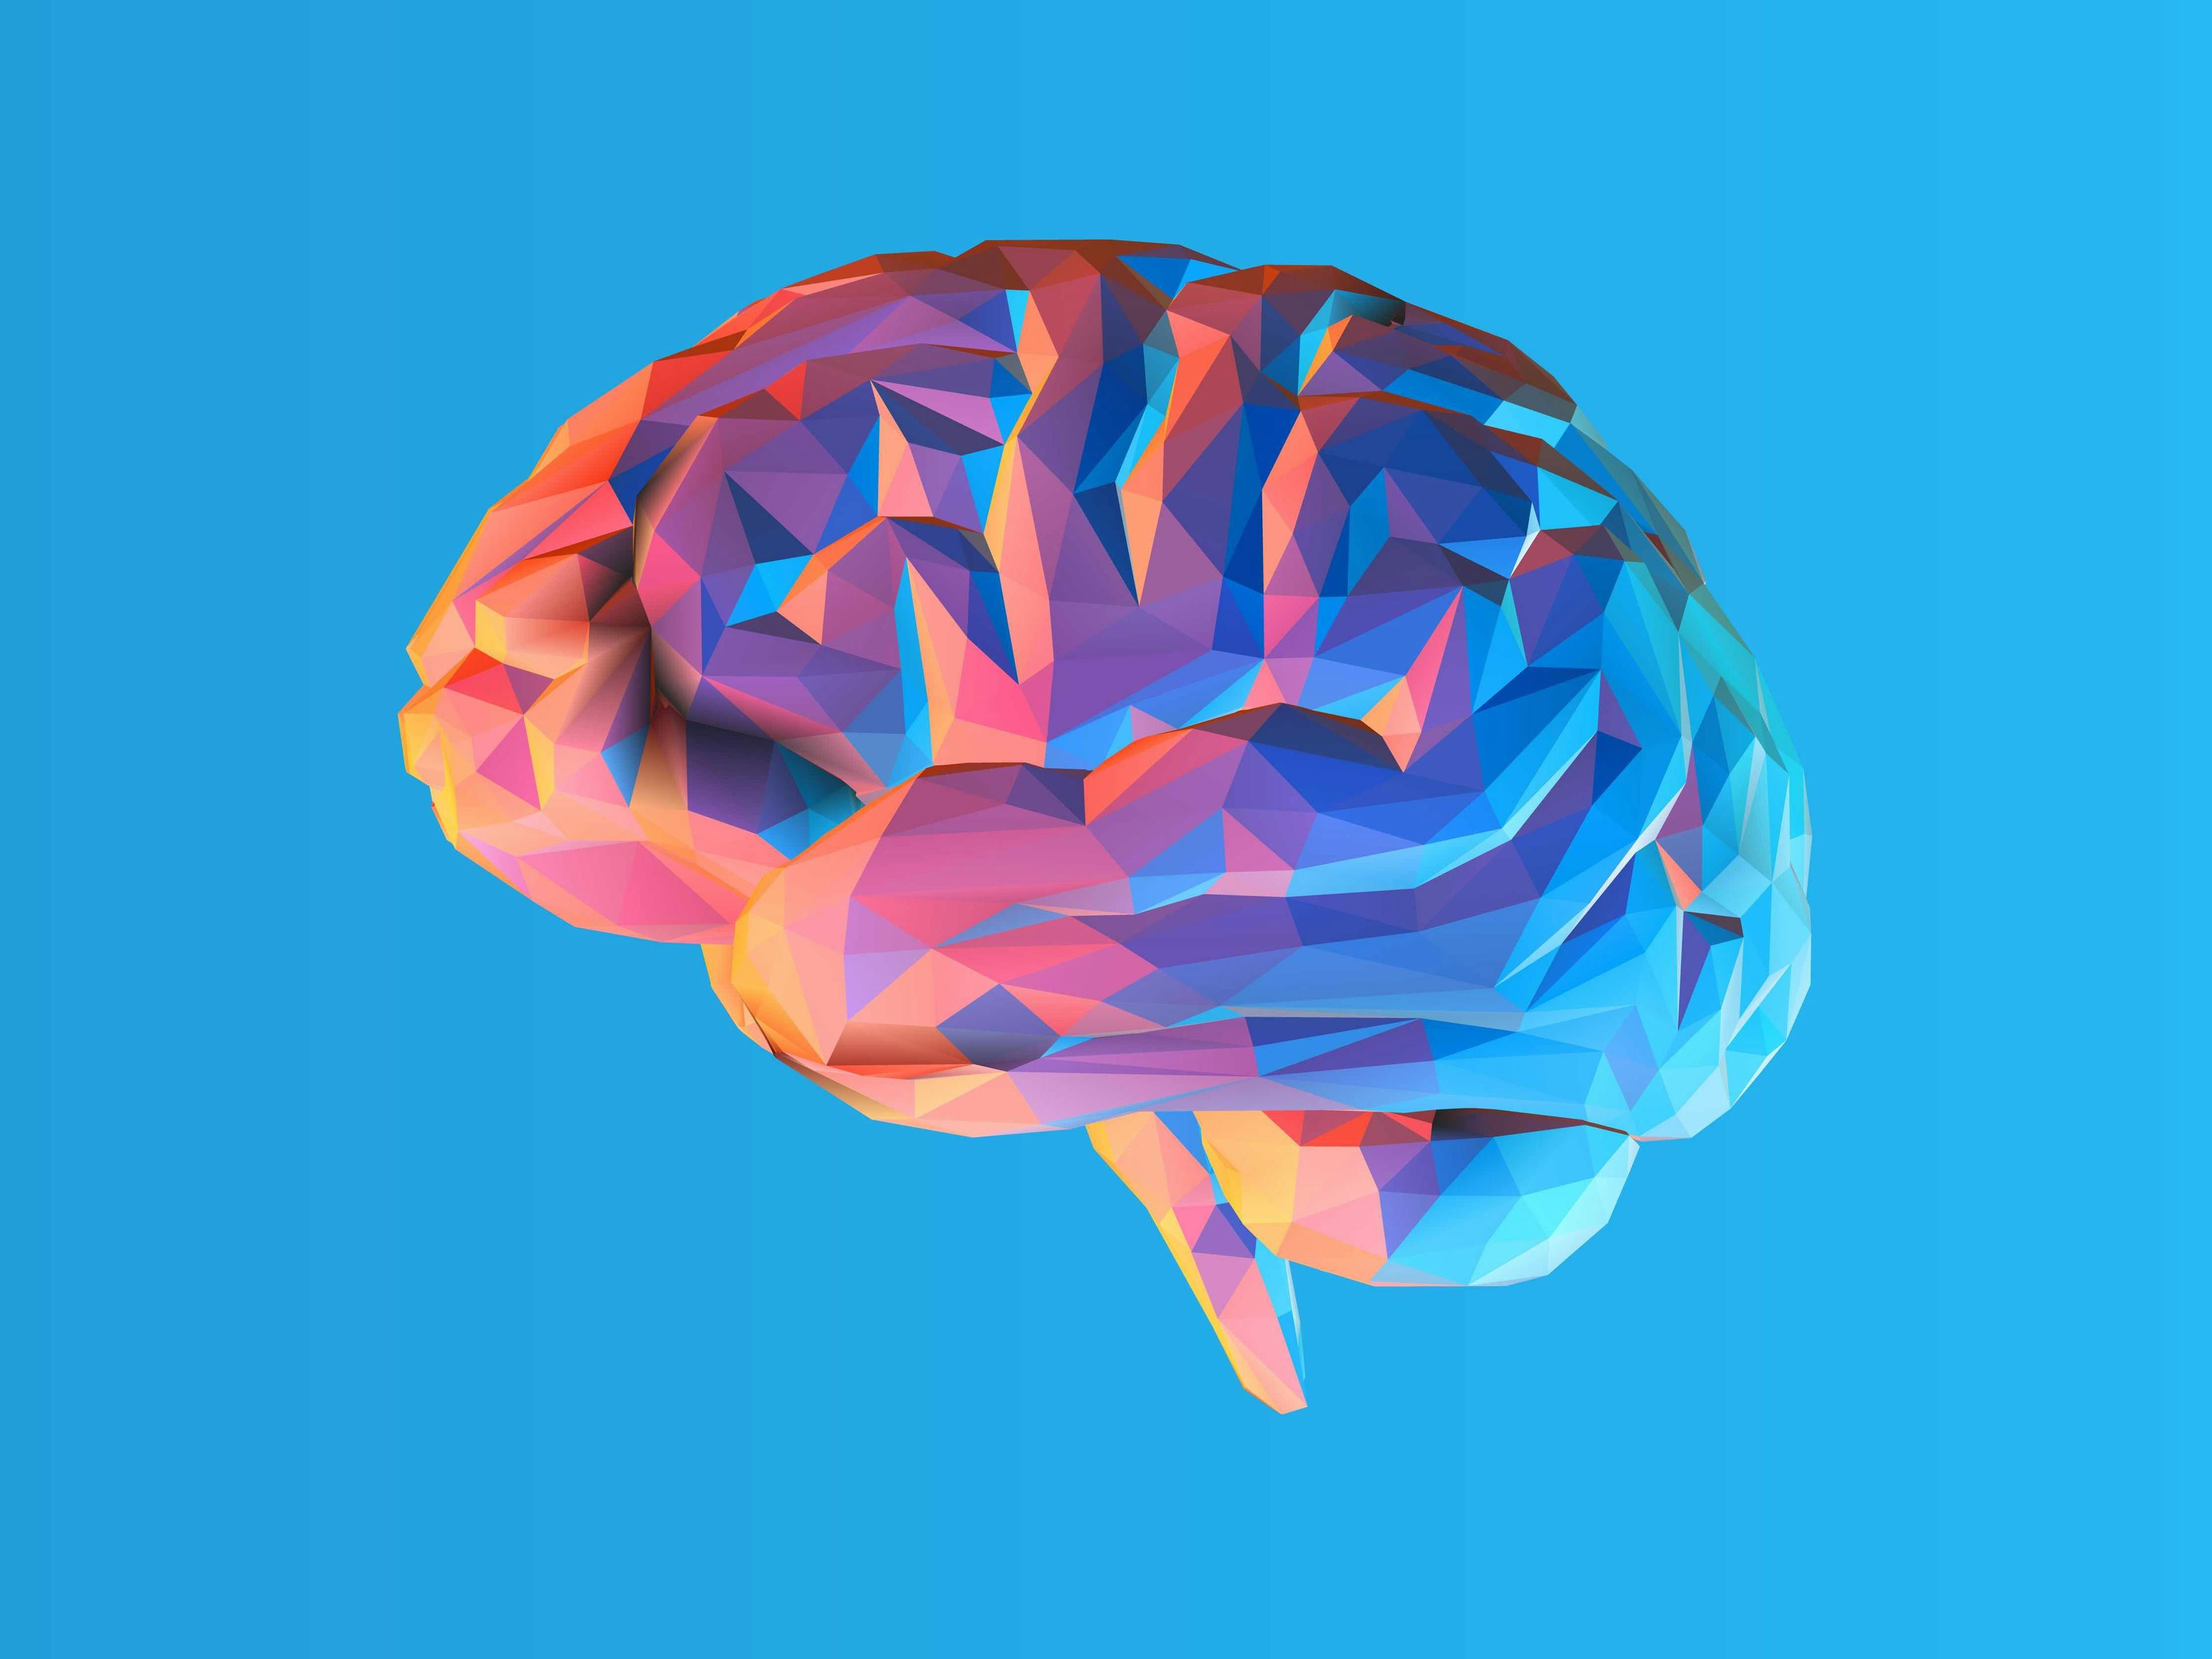 Brain illustration in blue and pink | Image credit: jolygon - stock.adobe.com.jpg